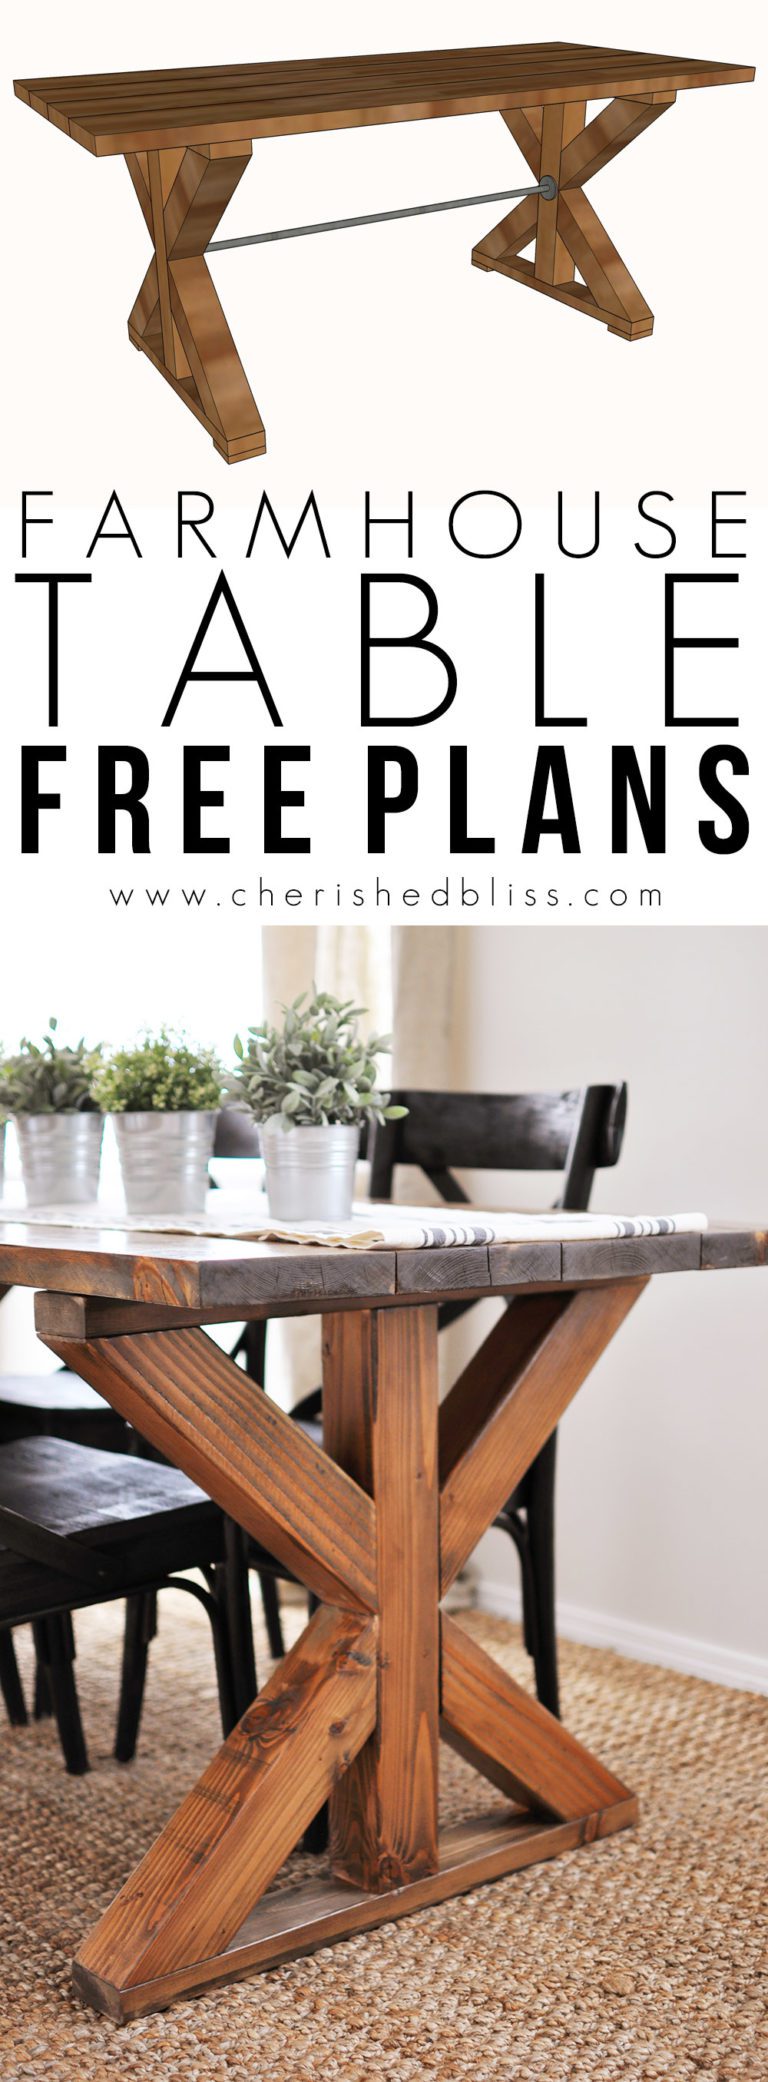 X Farmhouse Table Free Plans 1